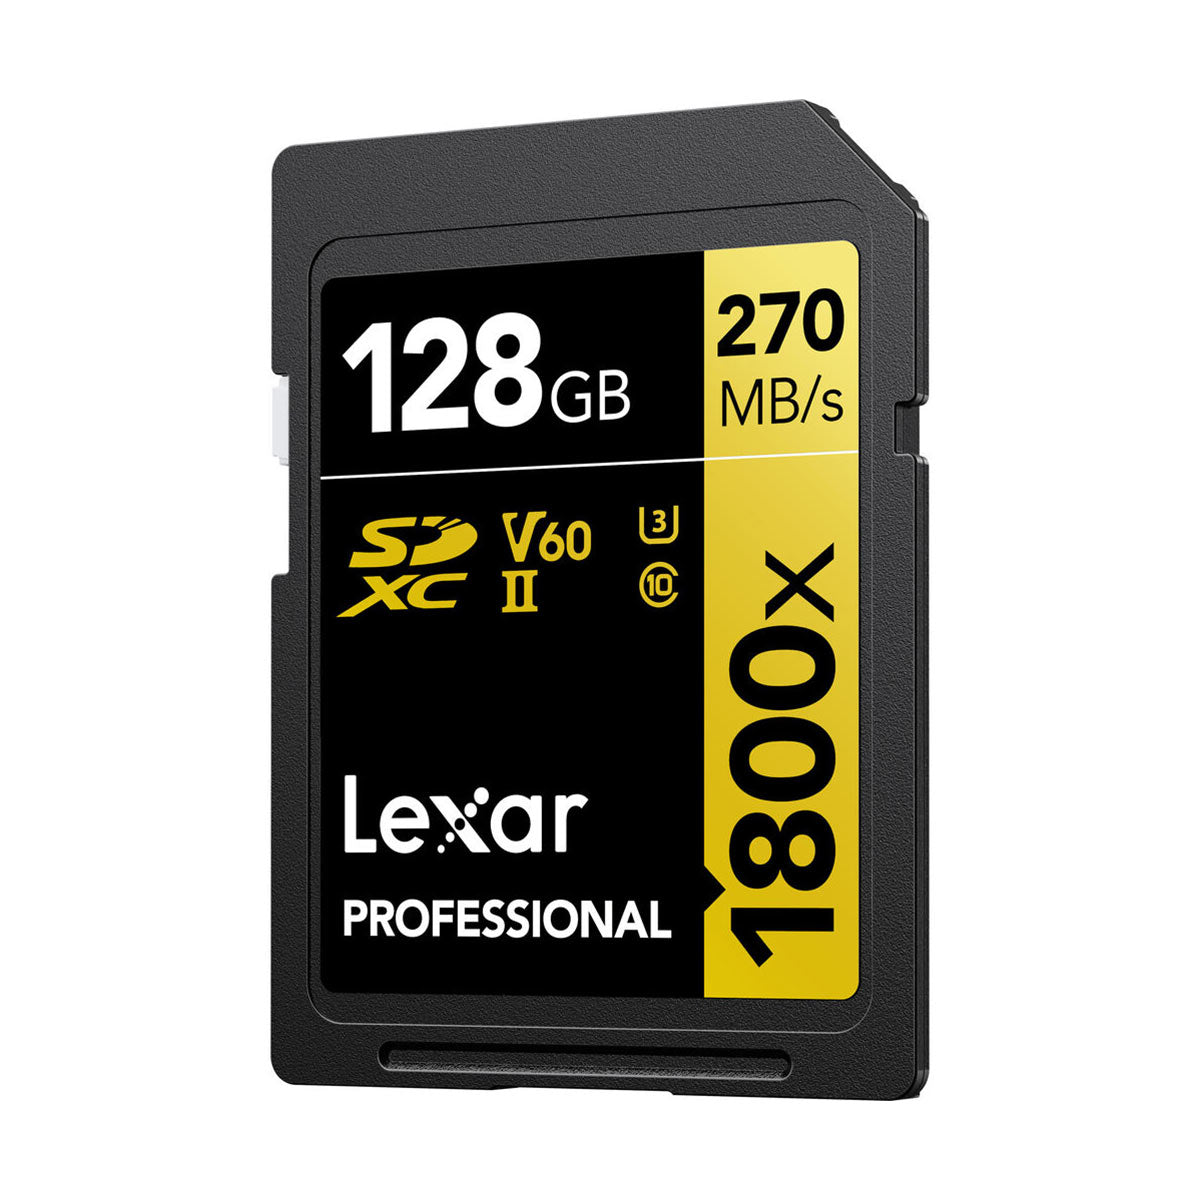 Lexar 128GB Professional 1800x UHS-II SDXC (V60) Memory Card